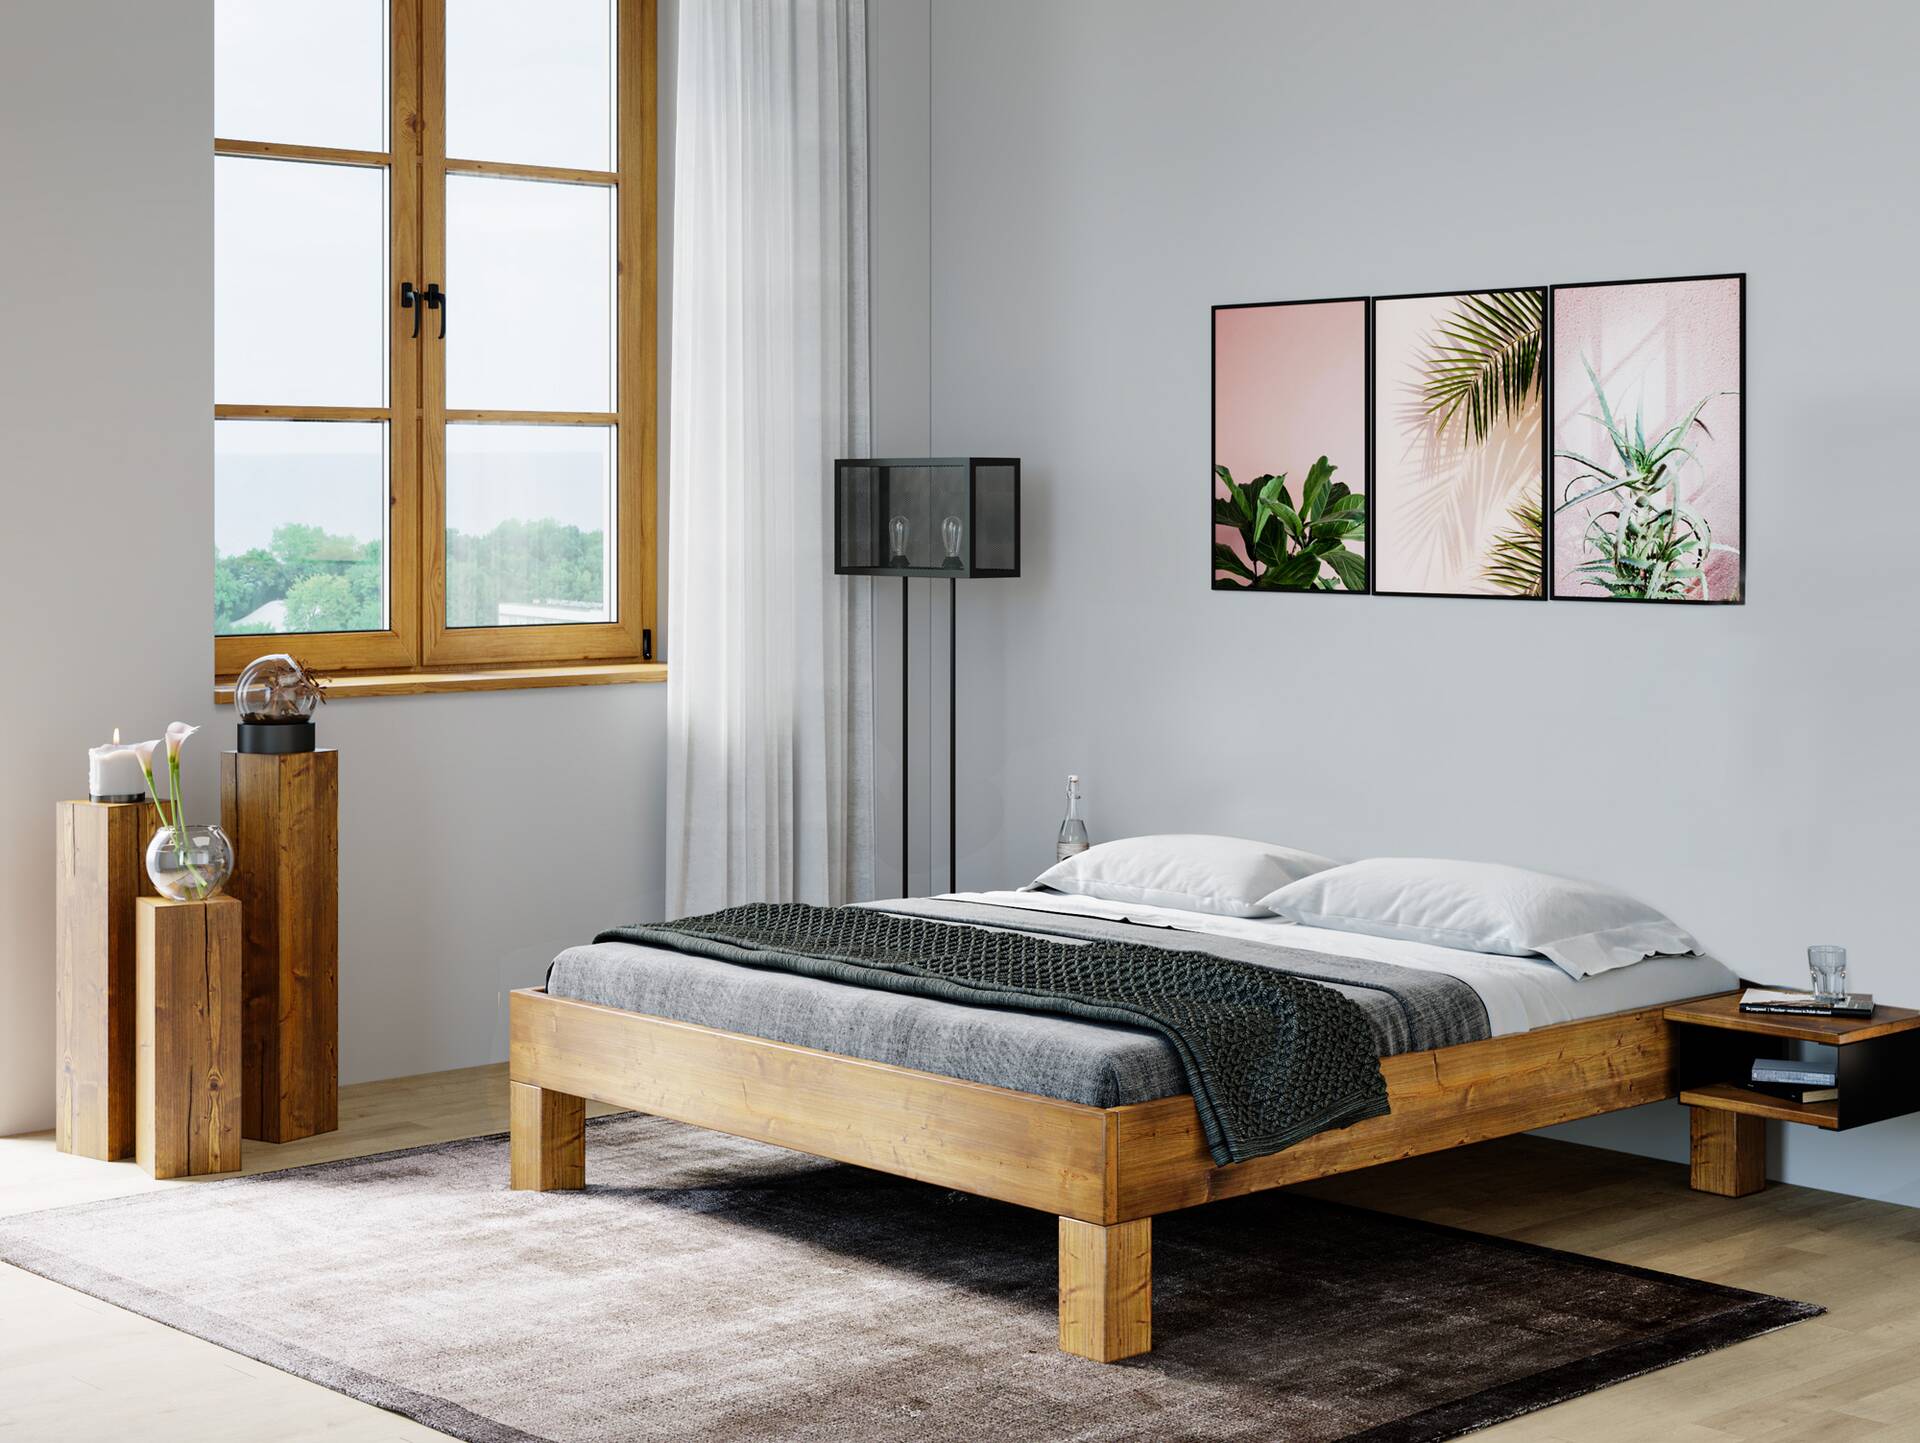 CURBY 4-Fuß-Bett ohne Kopfteil, Material Massivholz, rustikale Altholzoptik, Fichte 90 x 200 cm | vintage | Standardhöhe